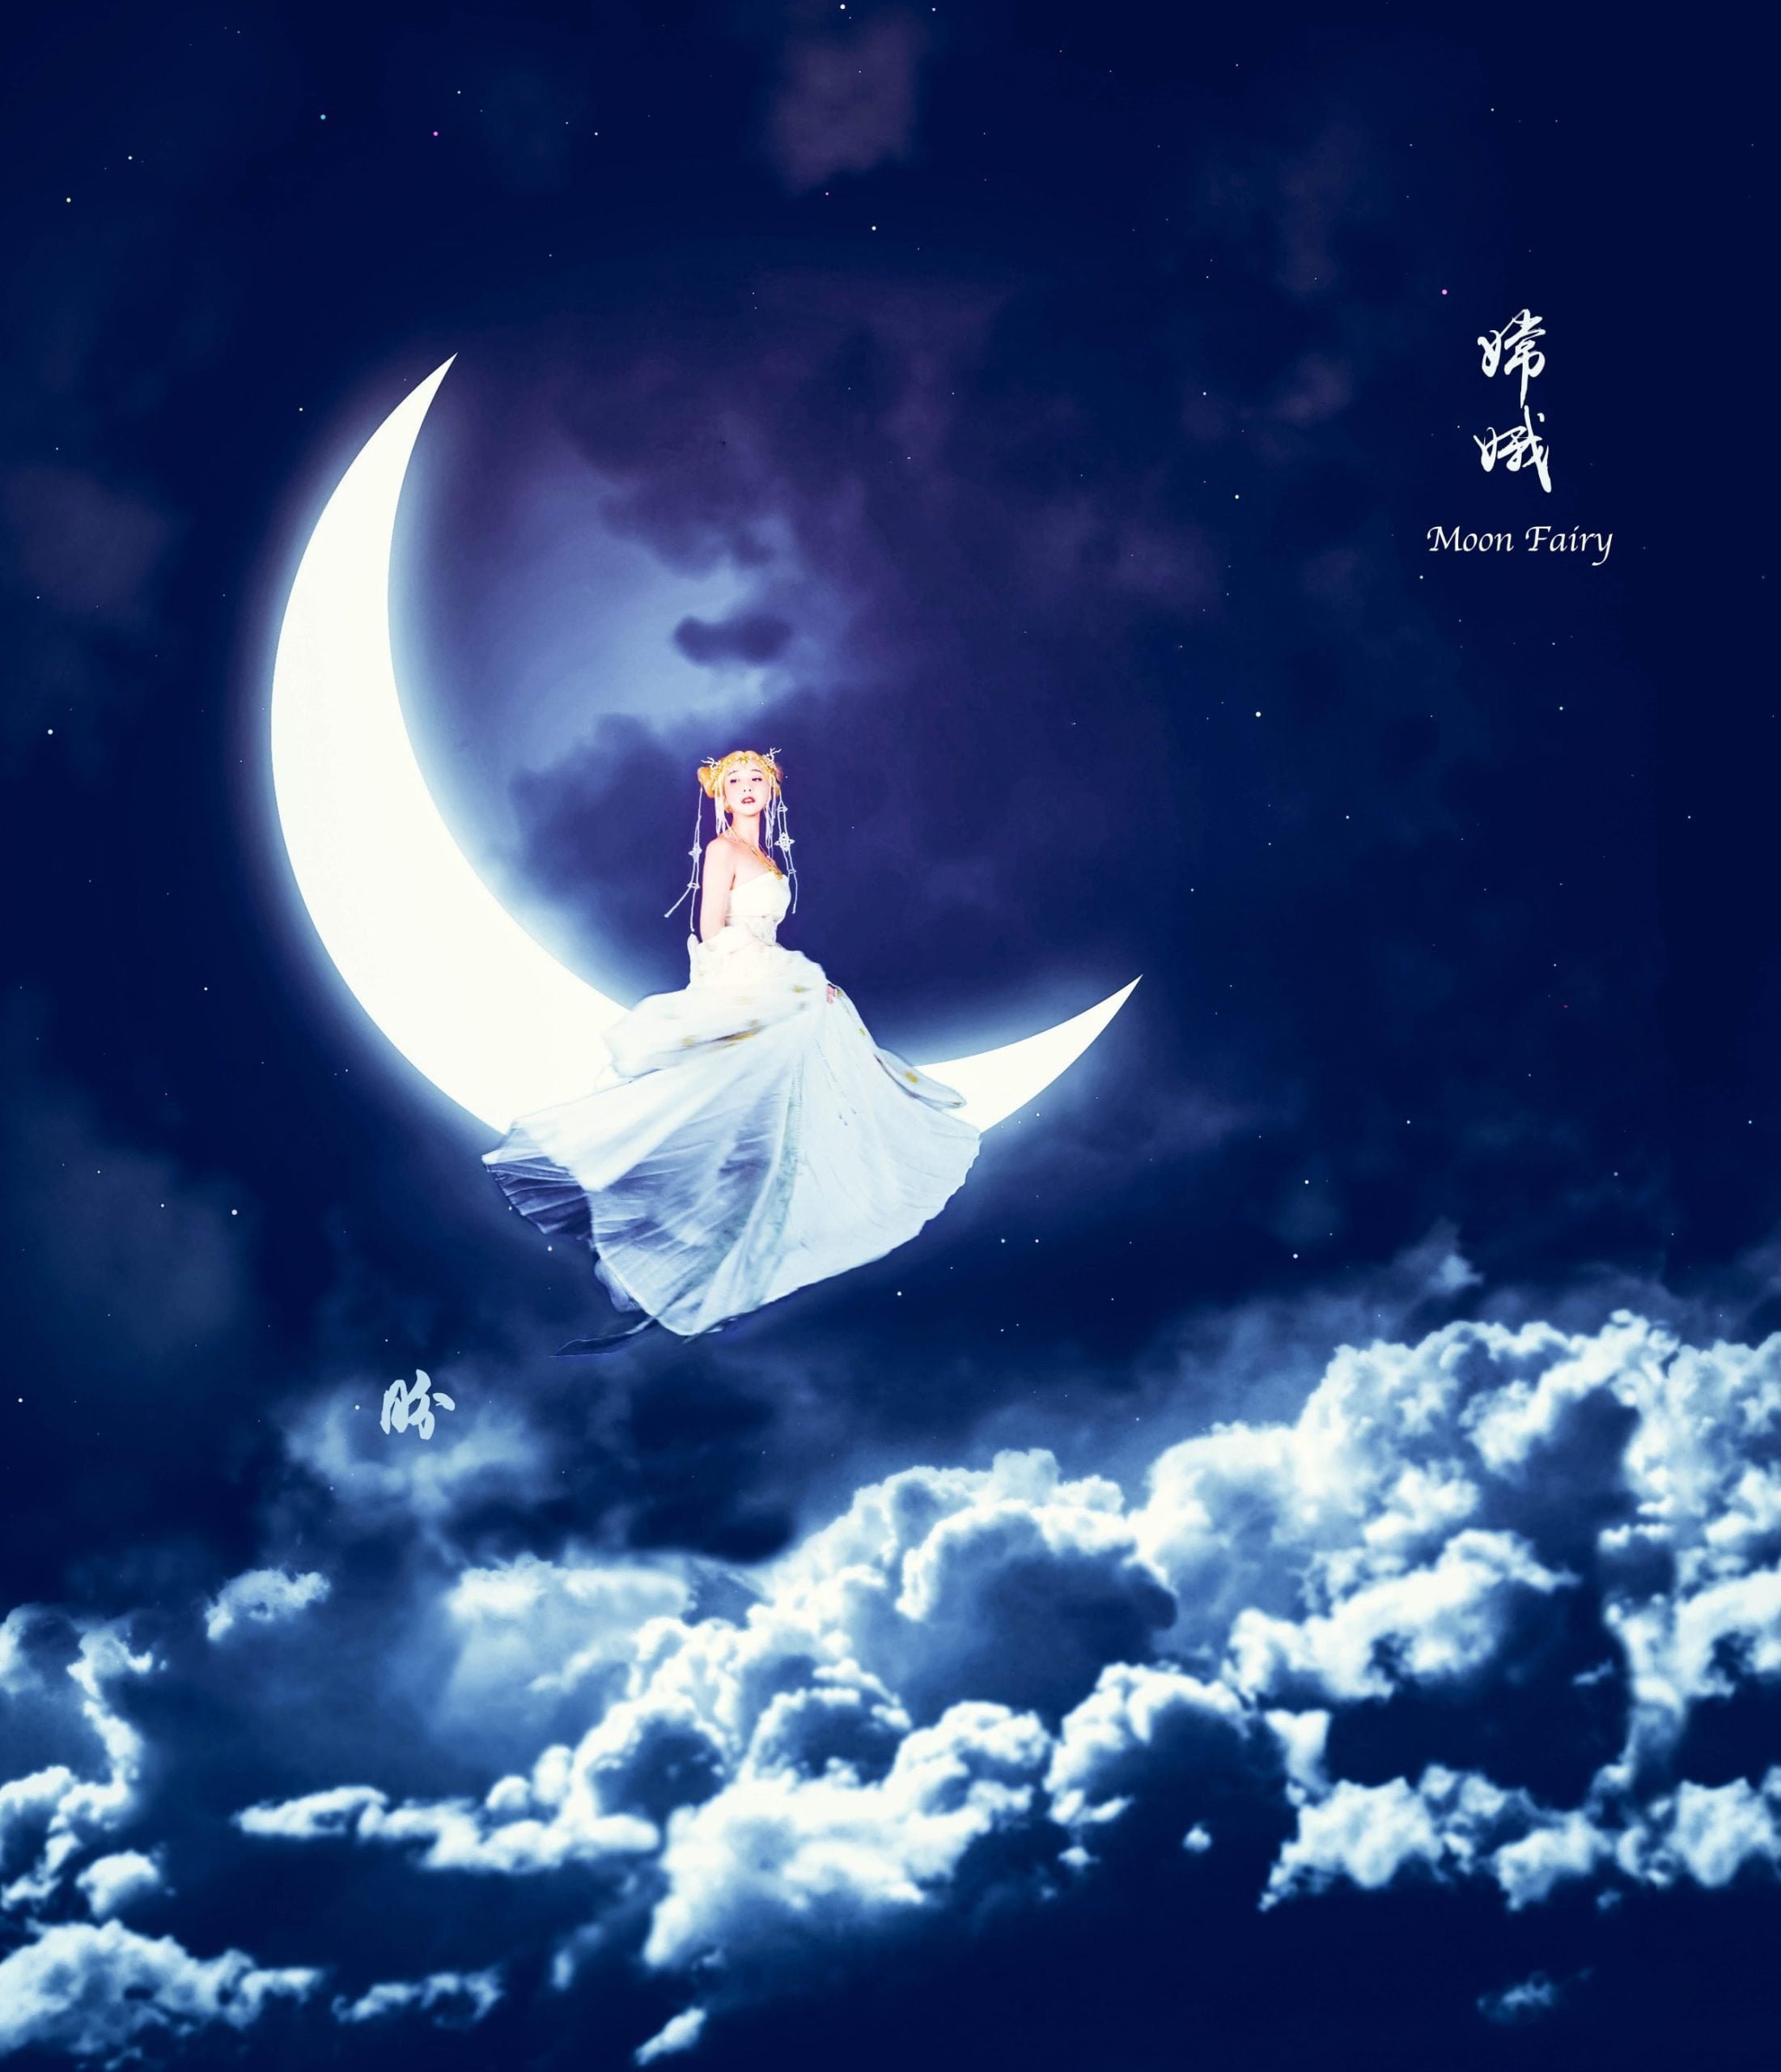 Hanfu Sailormoon, the Moon Fairy 嫦娥